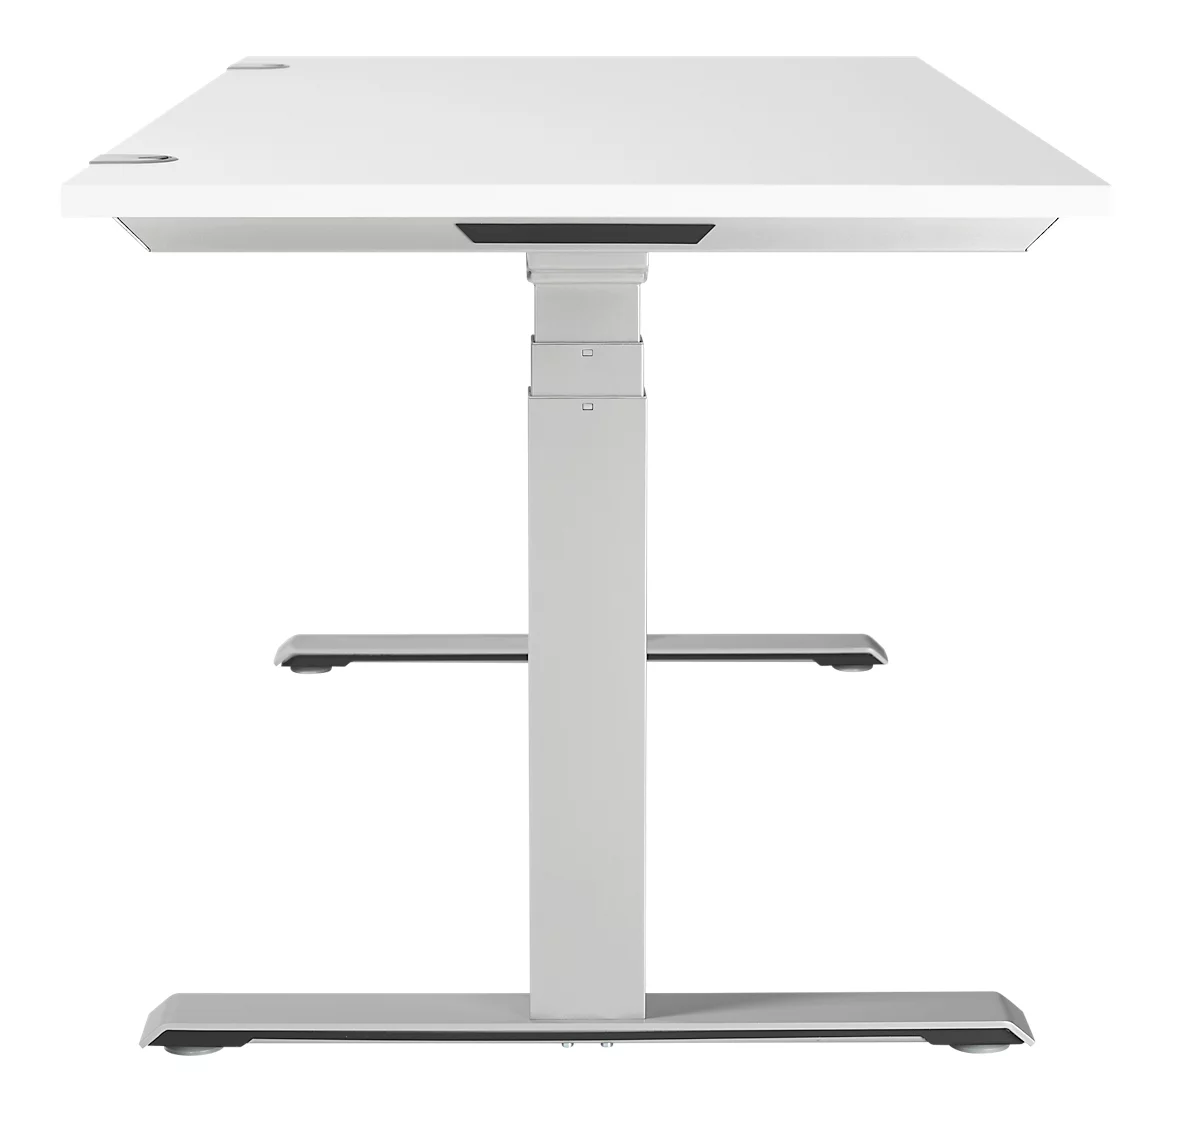 Schäfer Shop Genius MODENA FLEX escritorio, regulable en altura eléctricamente, rectangular, pie en T, ancho 1600 x fondo 800 x alto 645-1290 mm, aluminio blanco/blanco